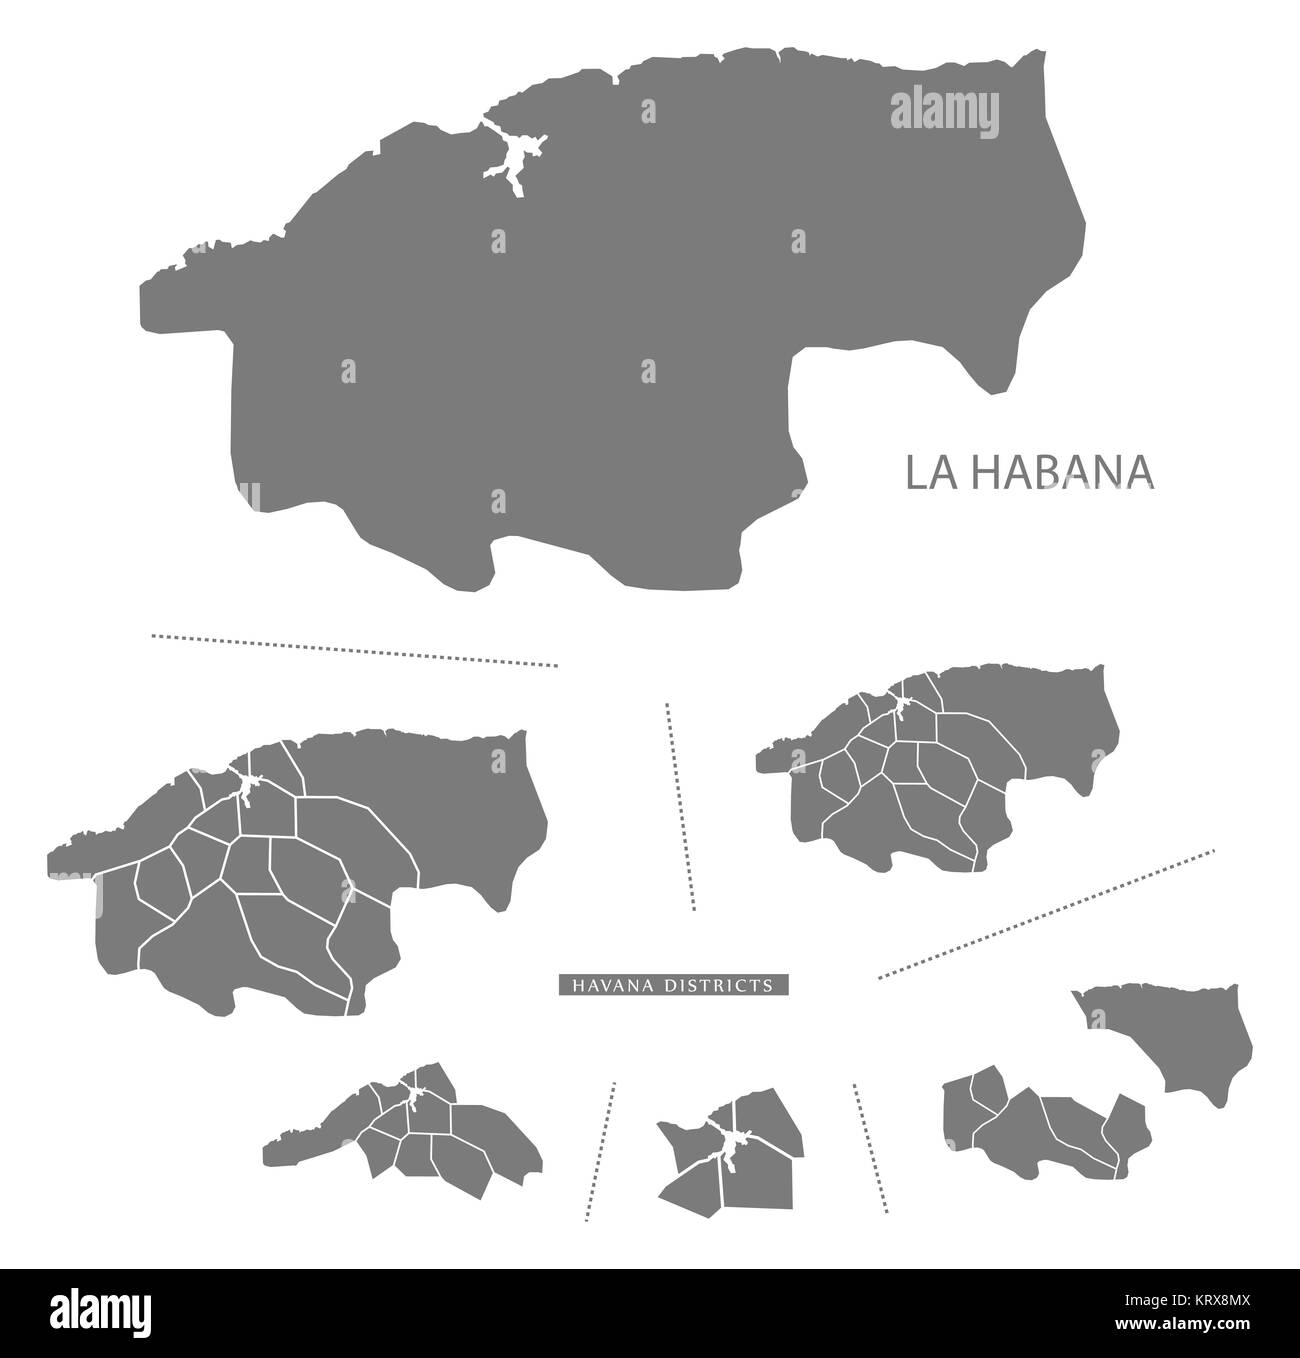 La Habana Cuba Map grey Stock Photo